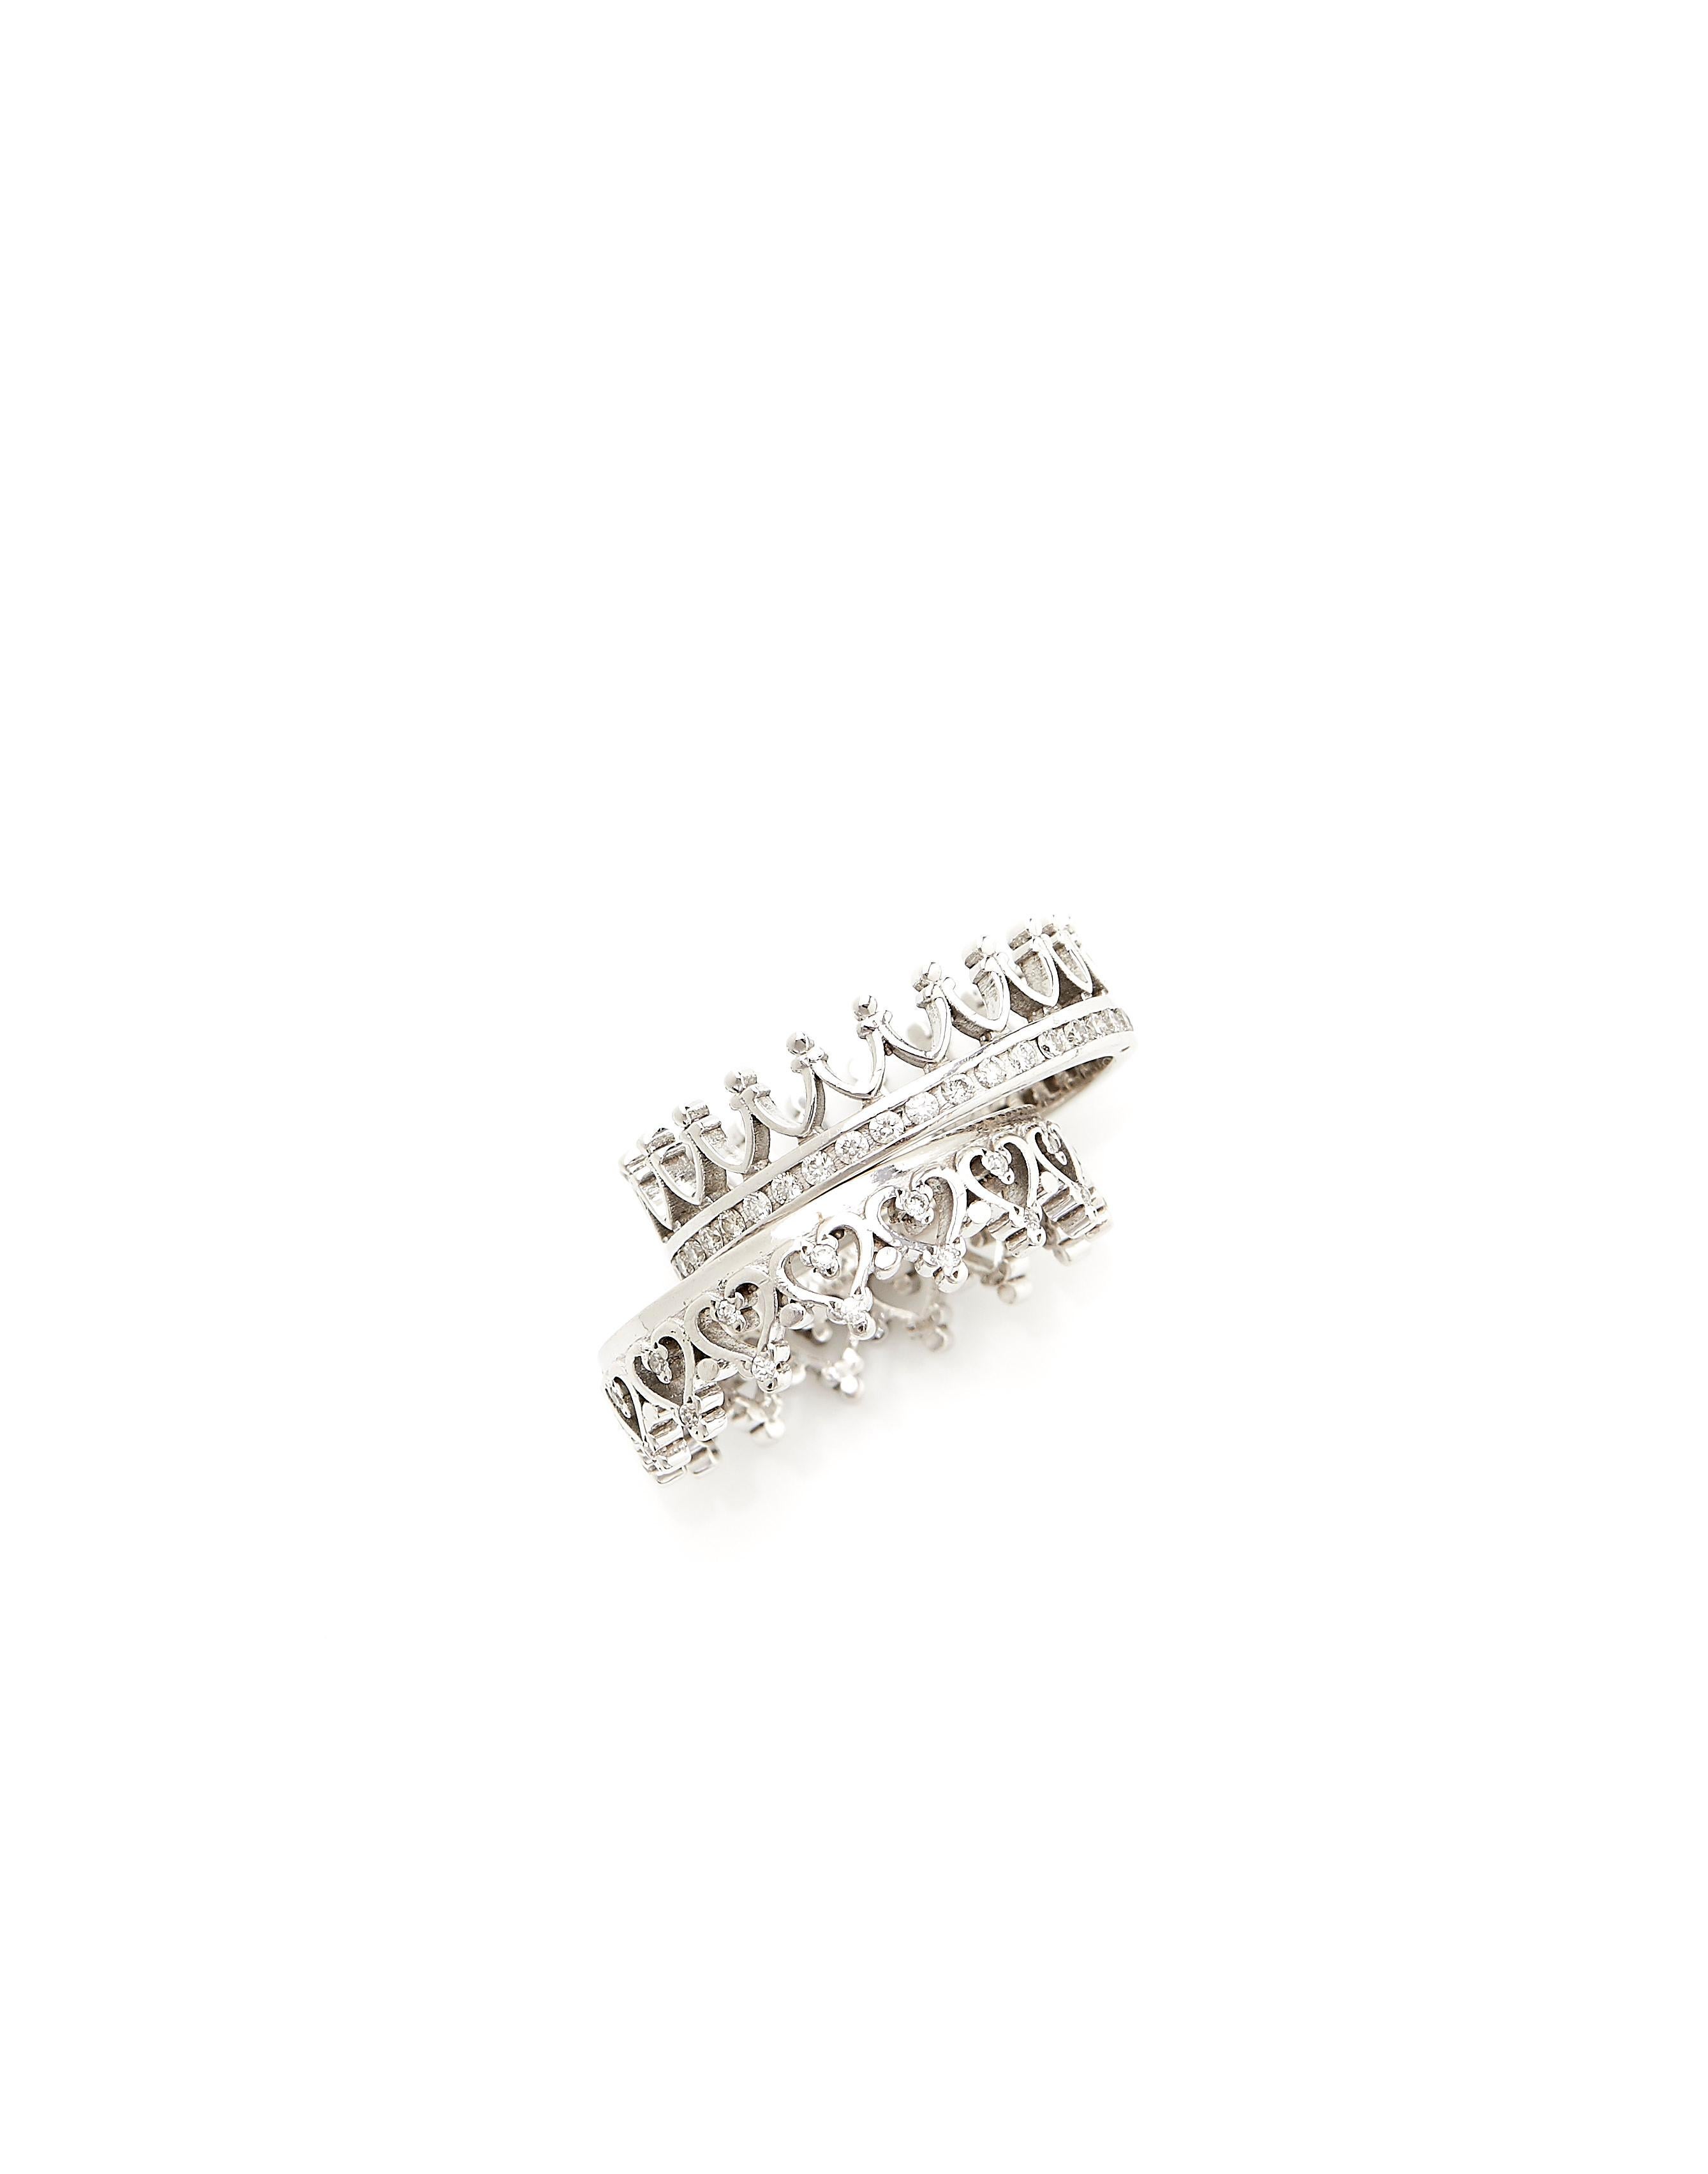 Brilliant Cut 18 Karat White Gold Fashion or Wedding Ring with 0.15 Carat Diamonds For Sale